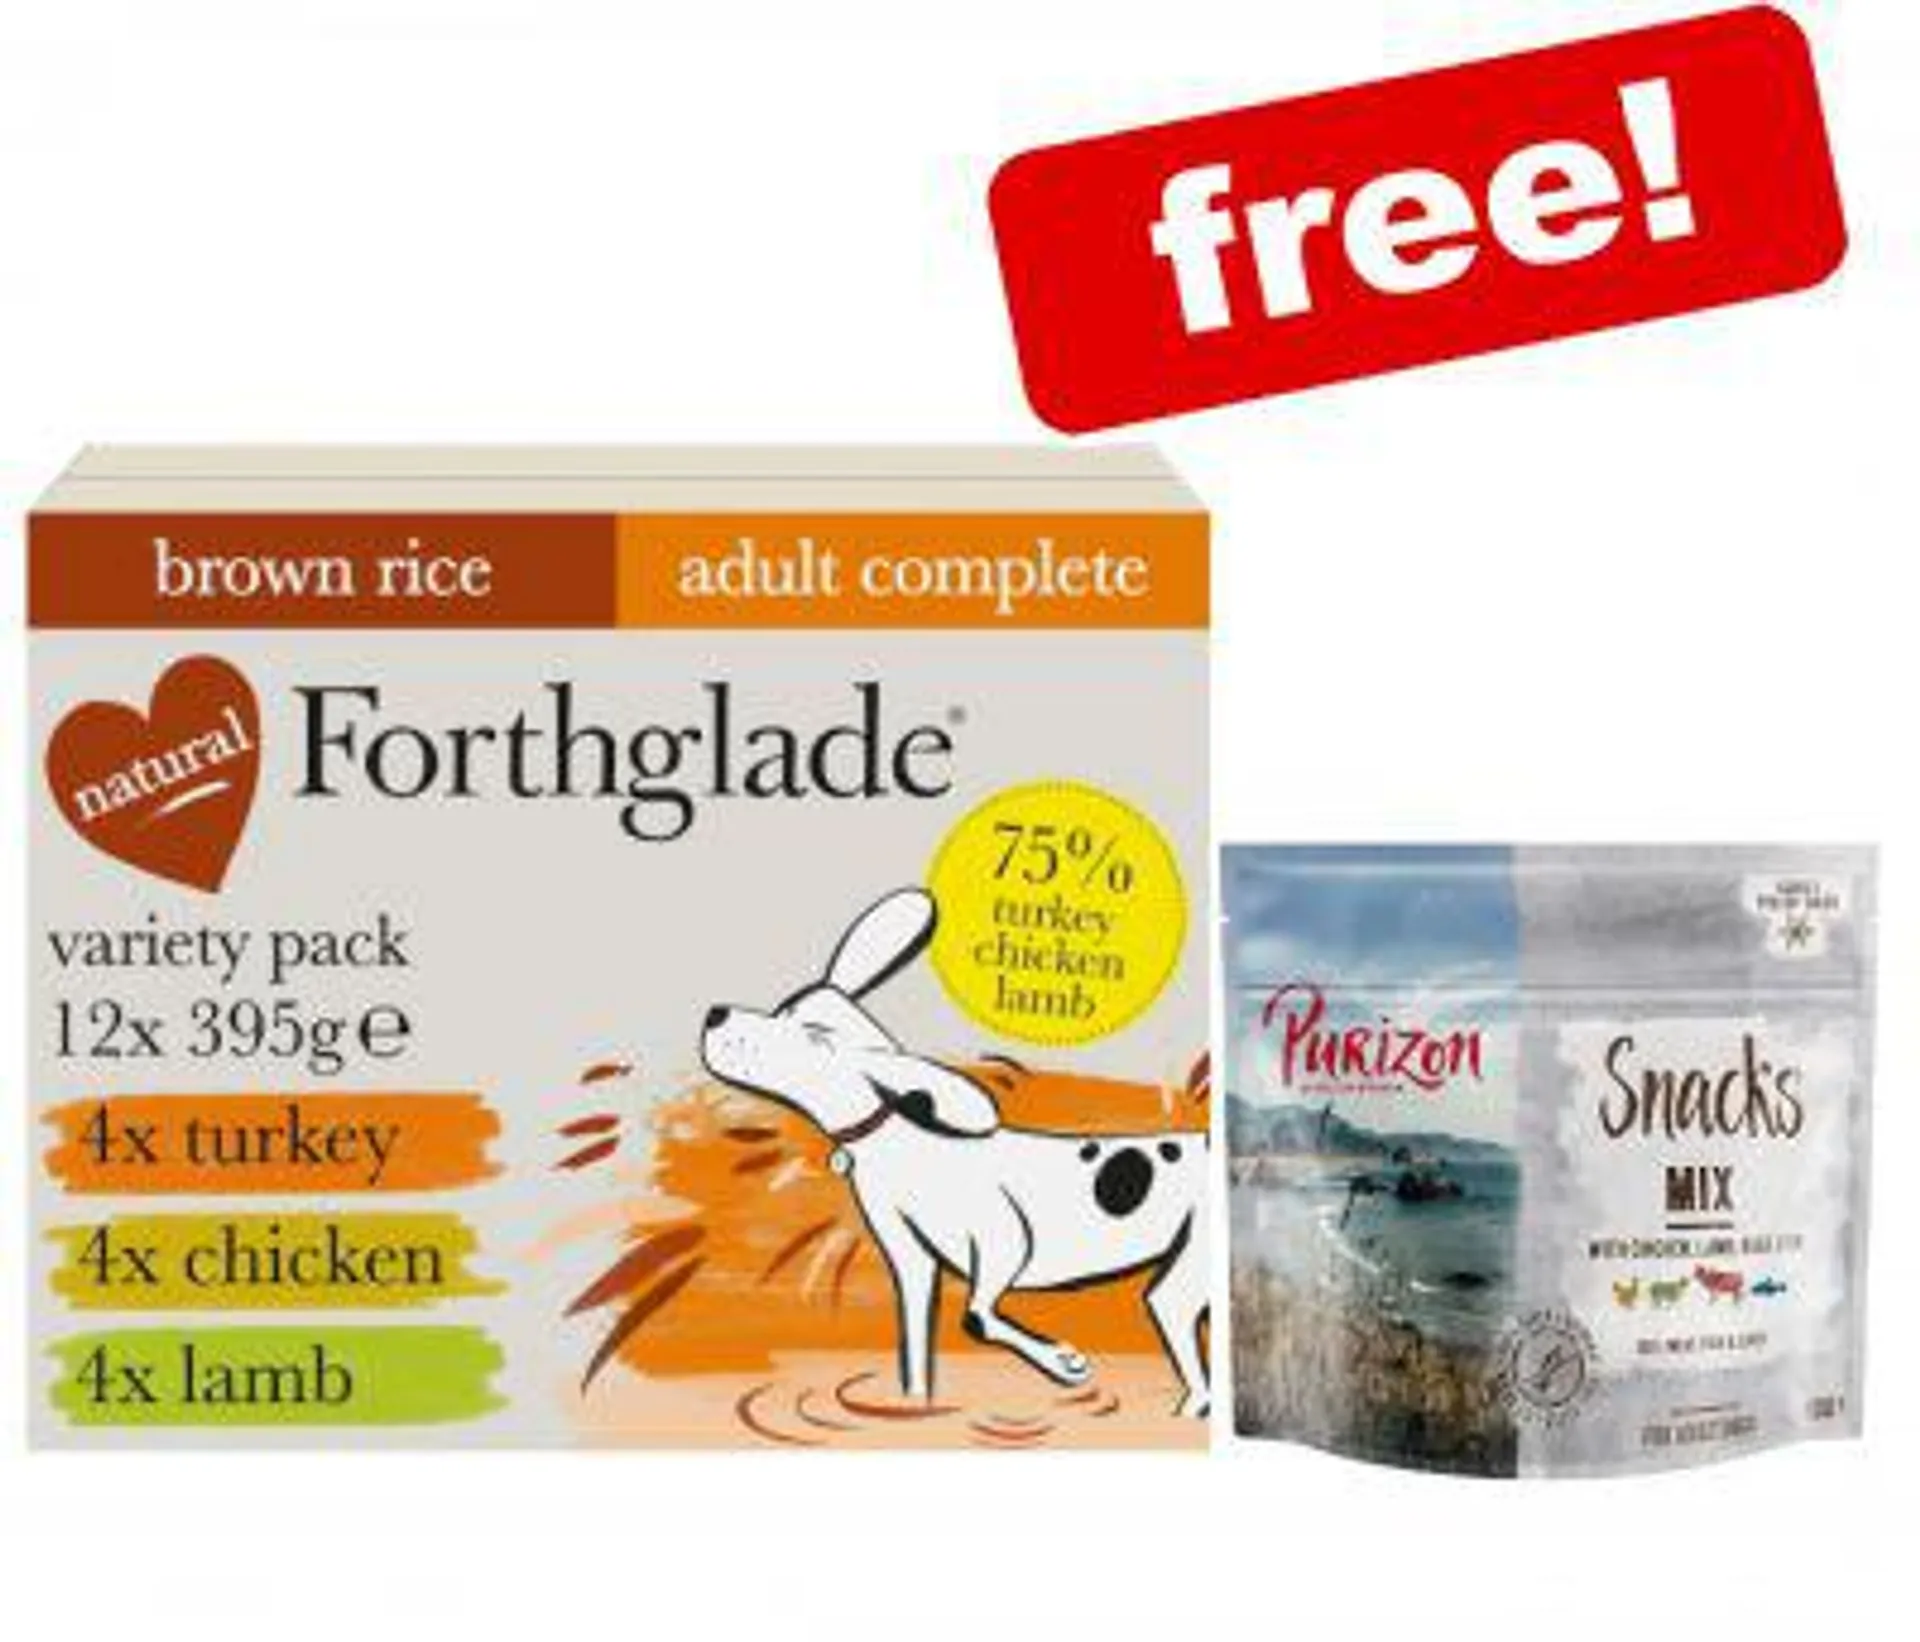 12 x 395g Forthglade Complete Meal Adult Wet Dog Food + Purizon Dog Snacks Free!*